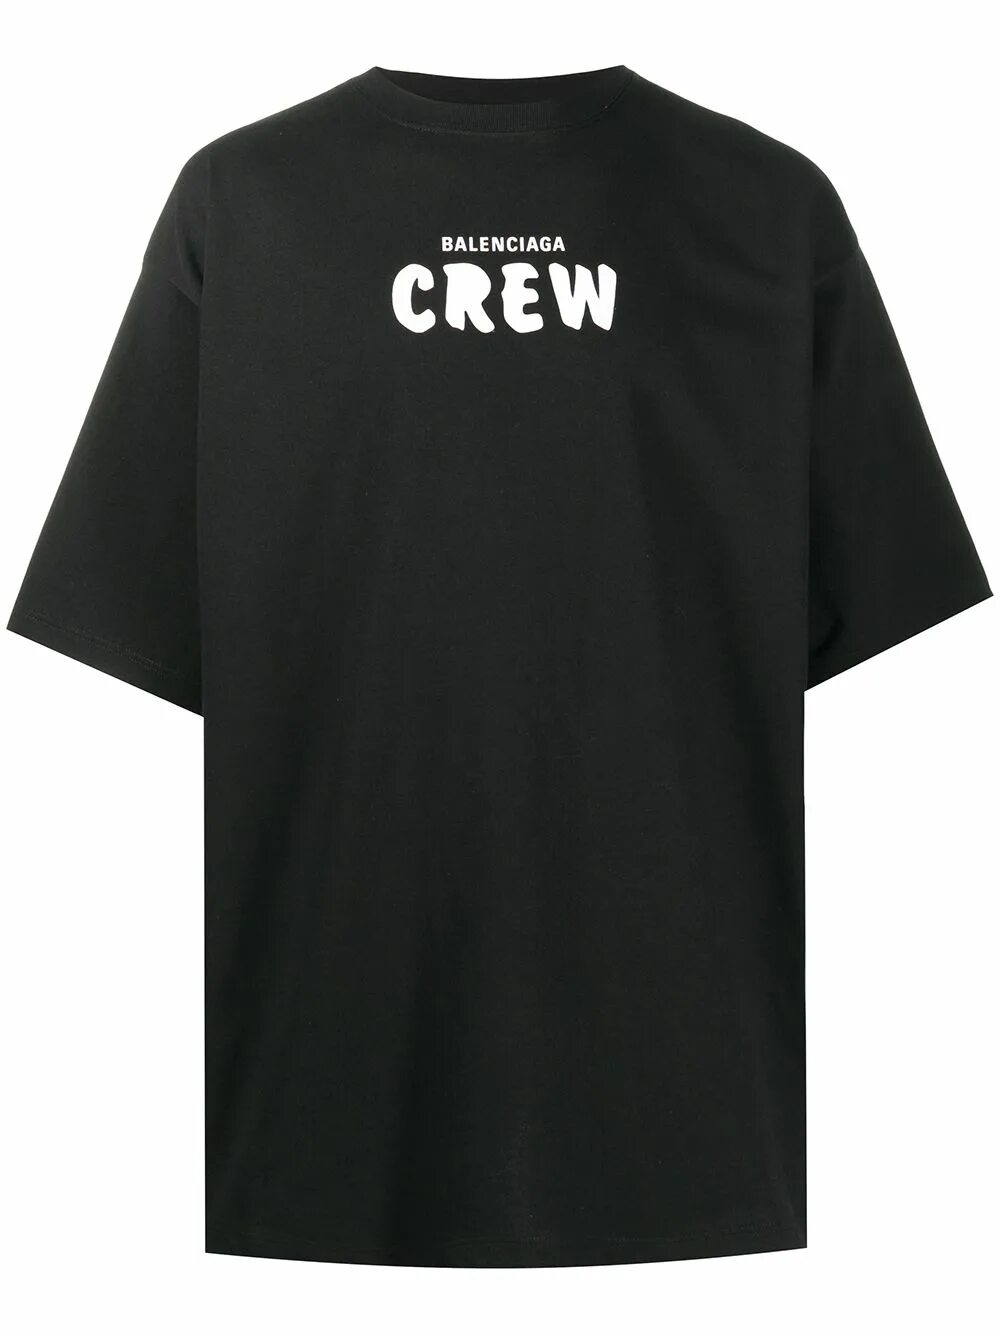 Balenciaga Crew футболка. Balenciaga футболка оверсайз с принтом Crew. Футболка Баленсиага мужская оверсайз. Майка Баленсиага.